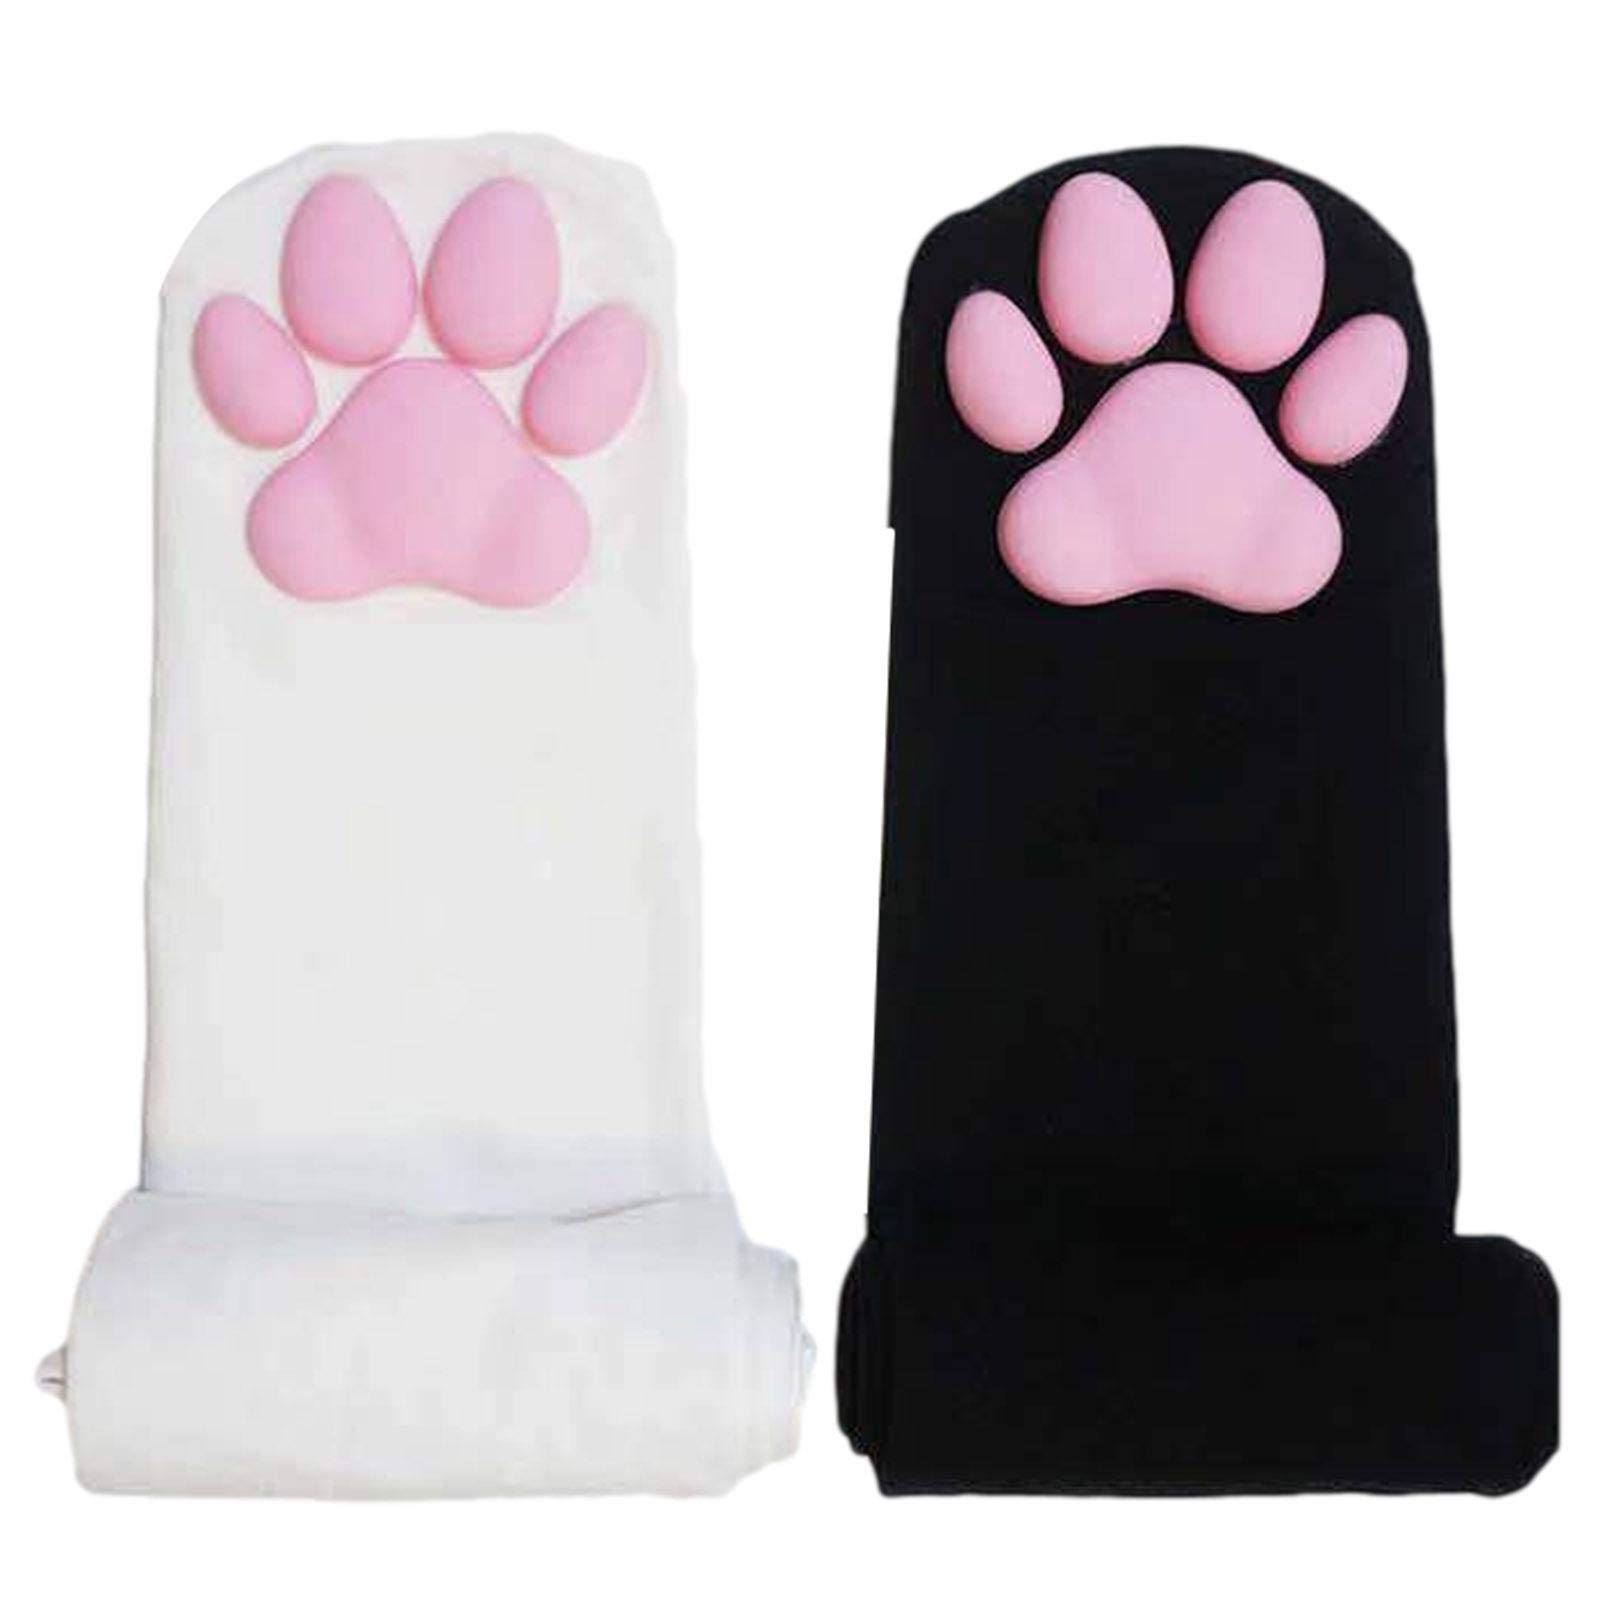 Luoji Thigh High Socks Cute Pink Cat Paw Pad Socks Overknee Warm Socks for Women Kitten Stocking, Atmungsaktiv Mädchen Cartoon Kawaii Strümpfe Bequem Kniestrümpfe Für Cosplay, Schwarz+weiß, S